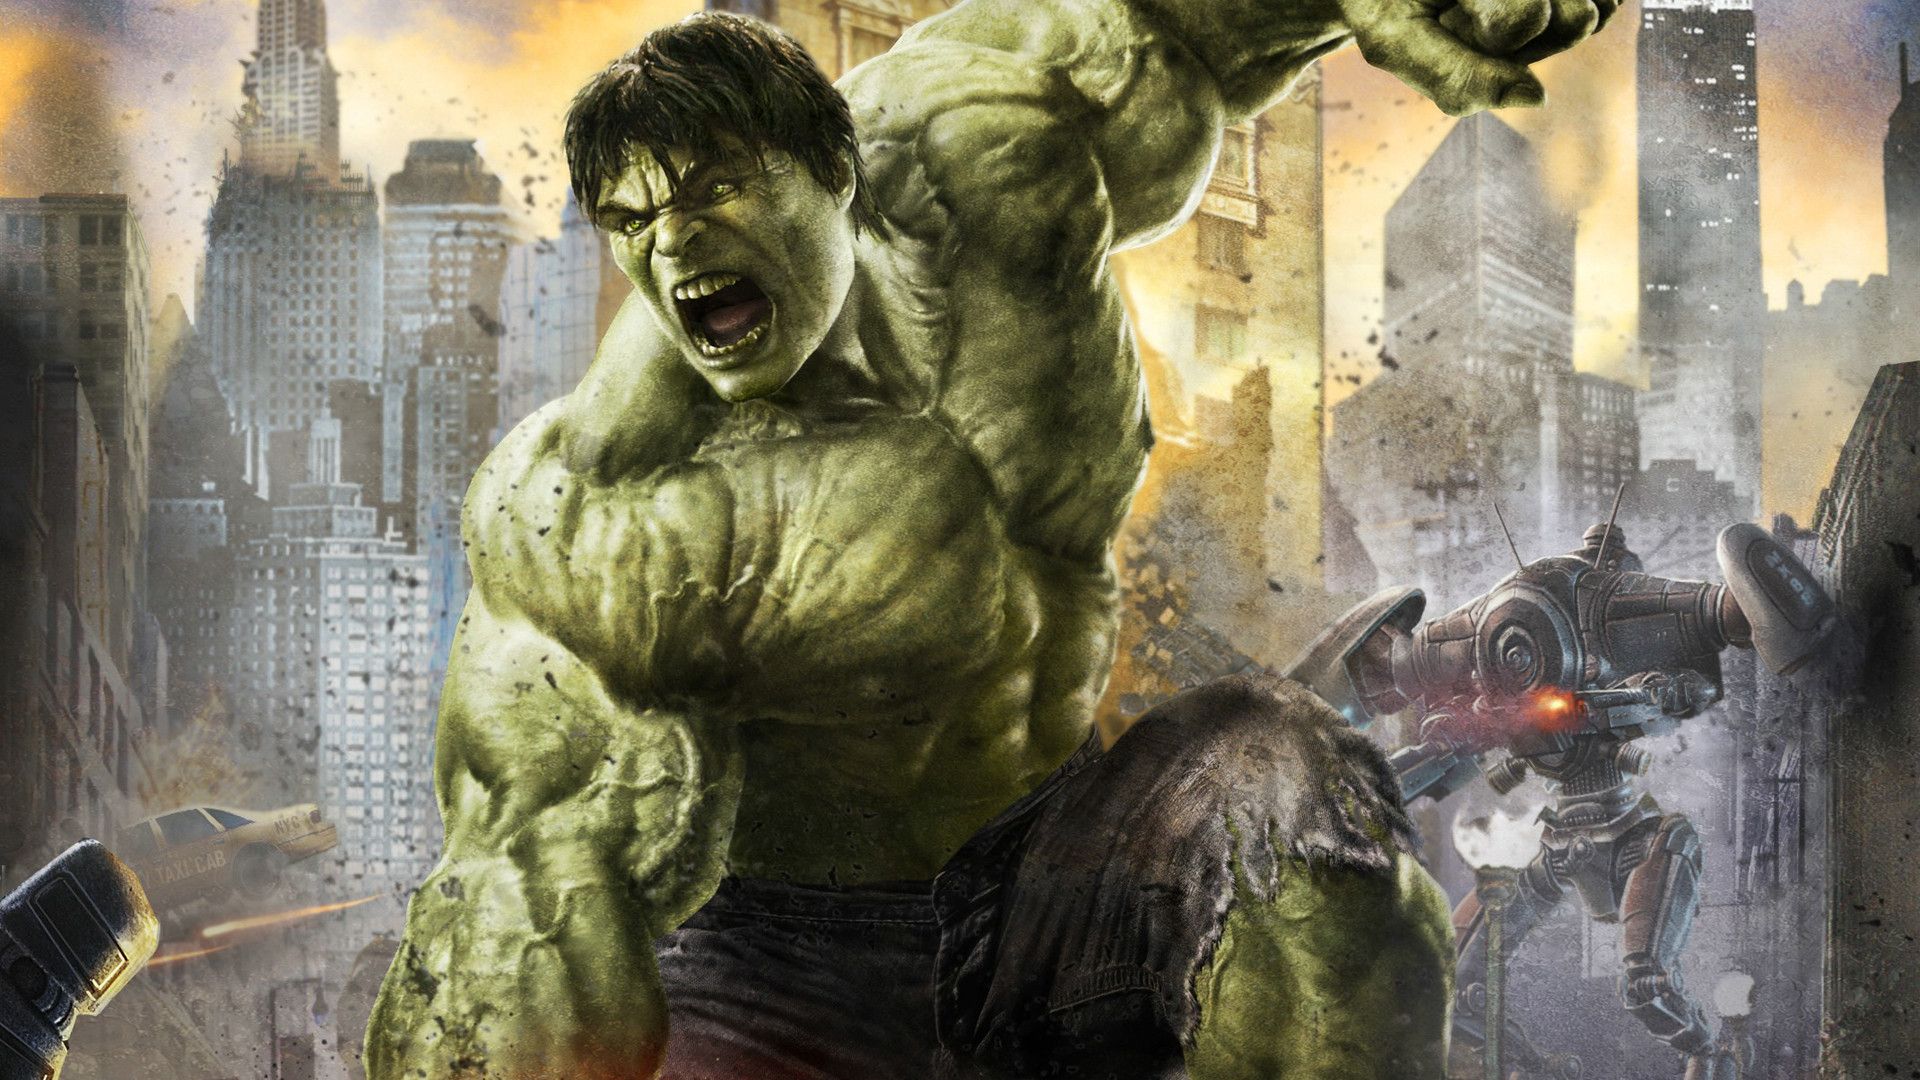 The Incredible Hulk Wallpapers